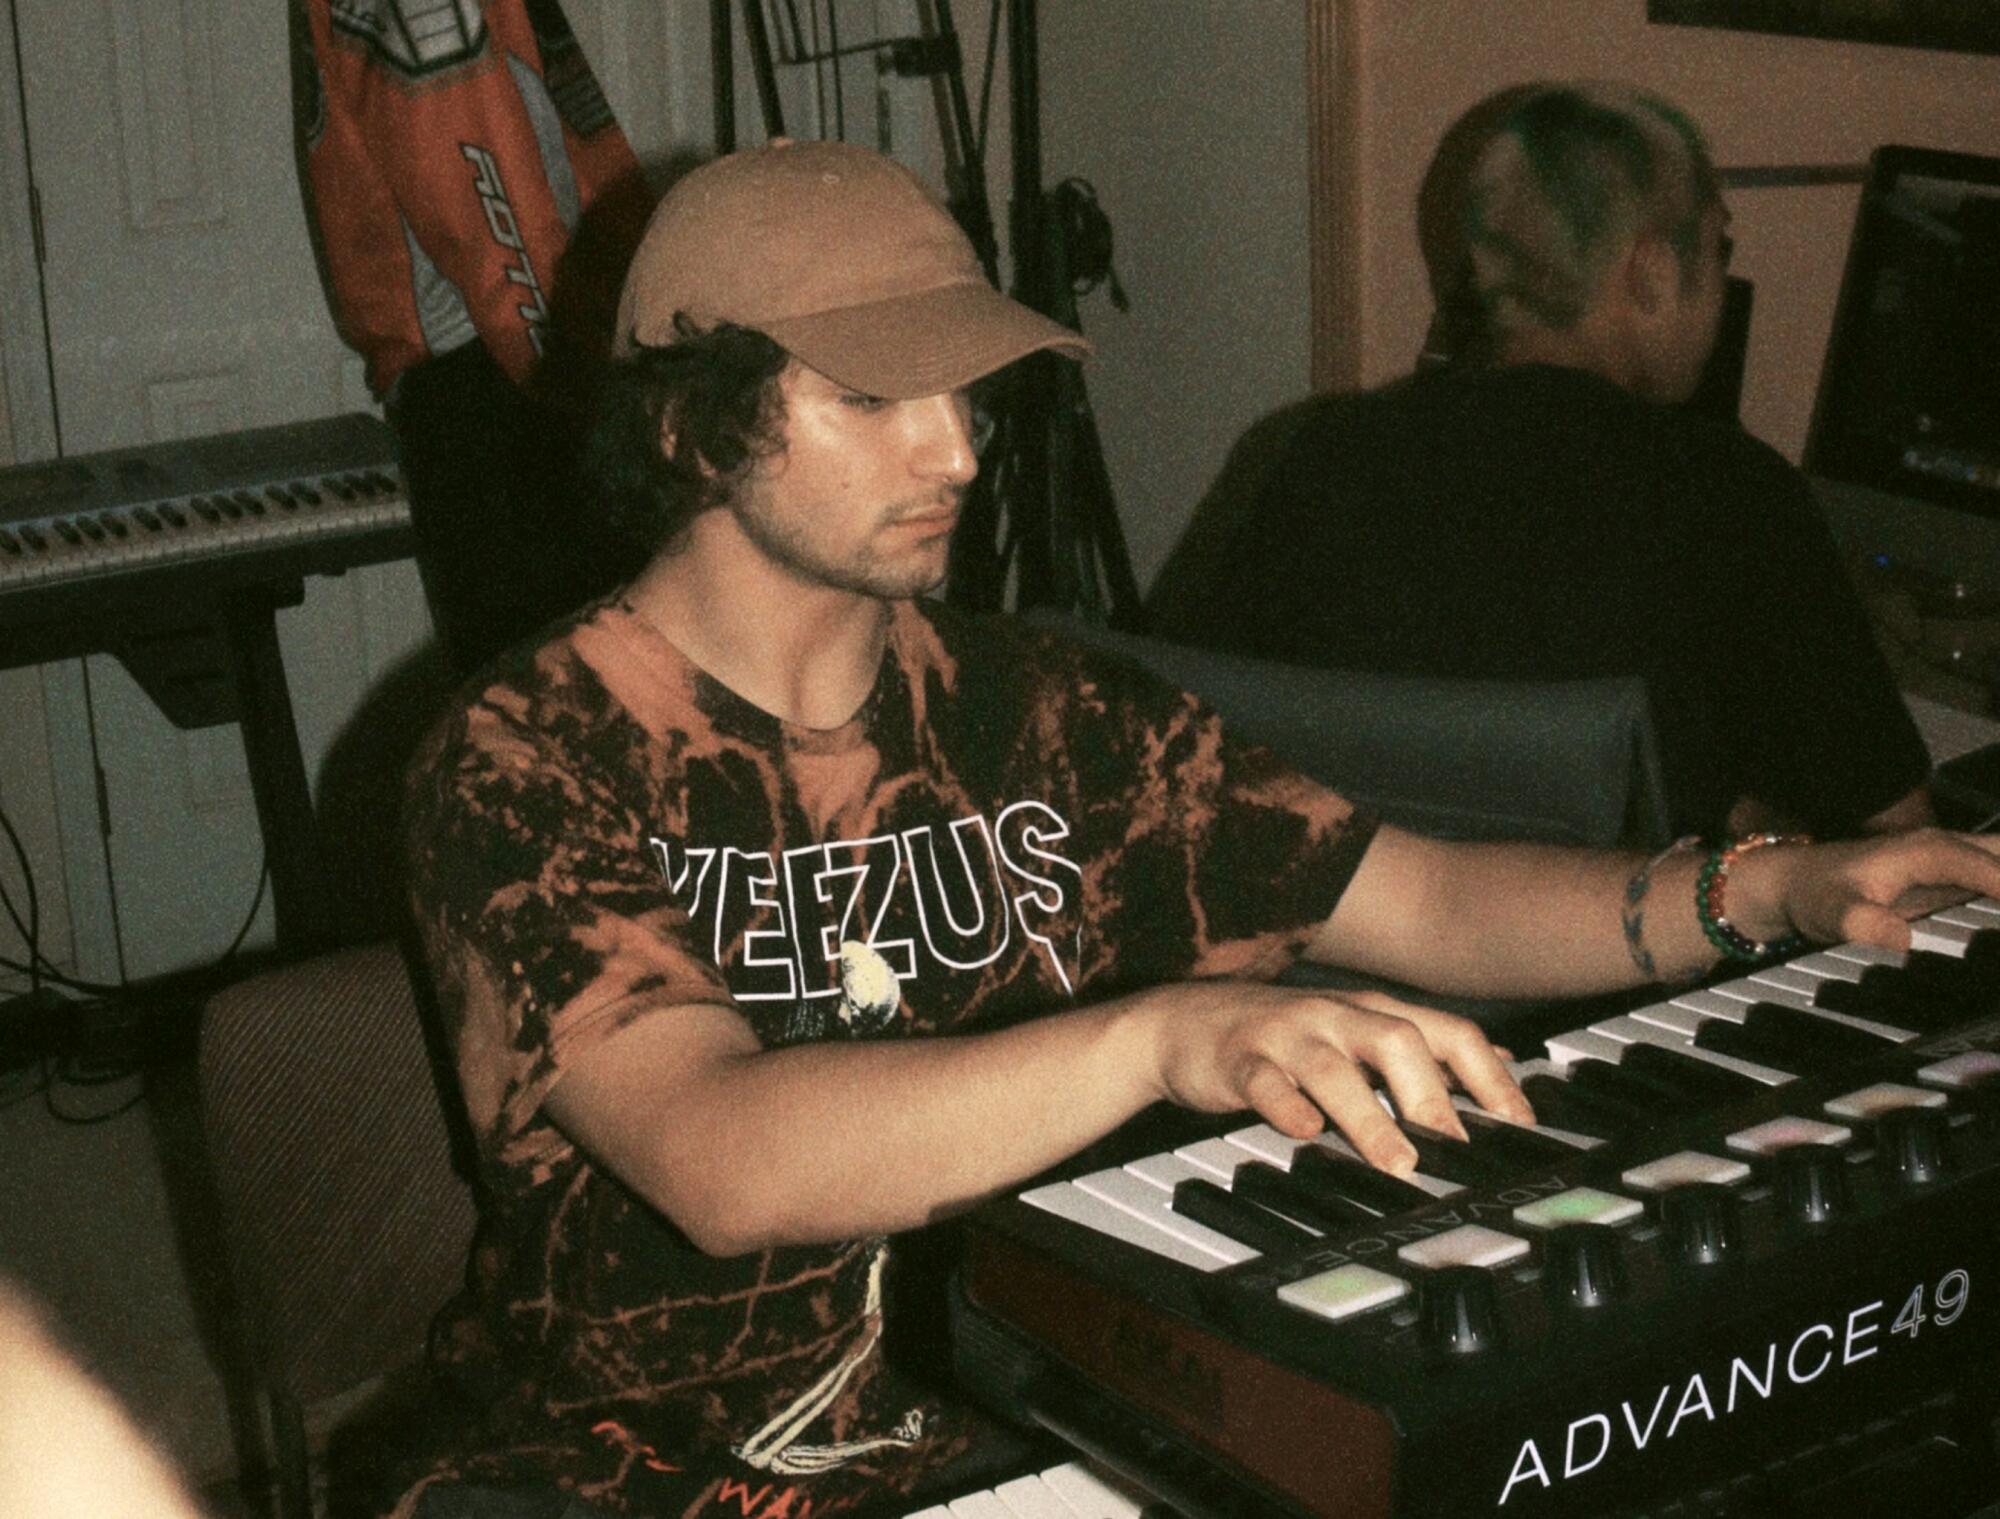 A man plays a keyboard